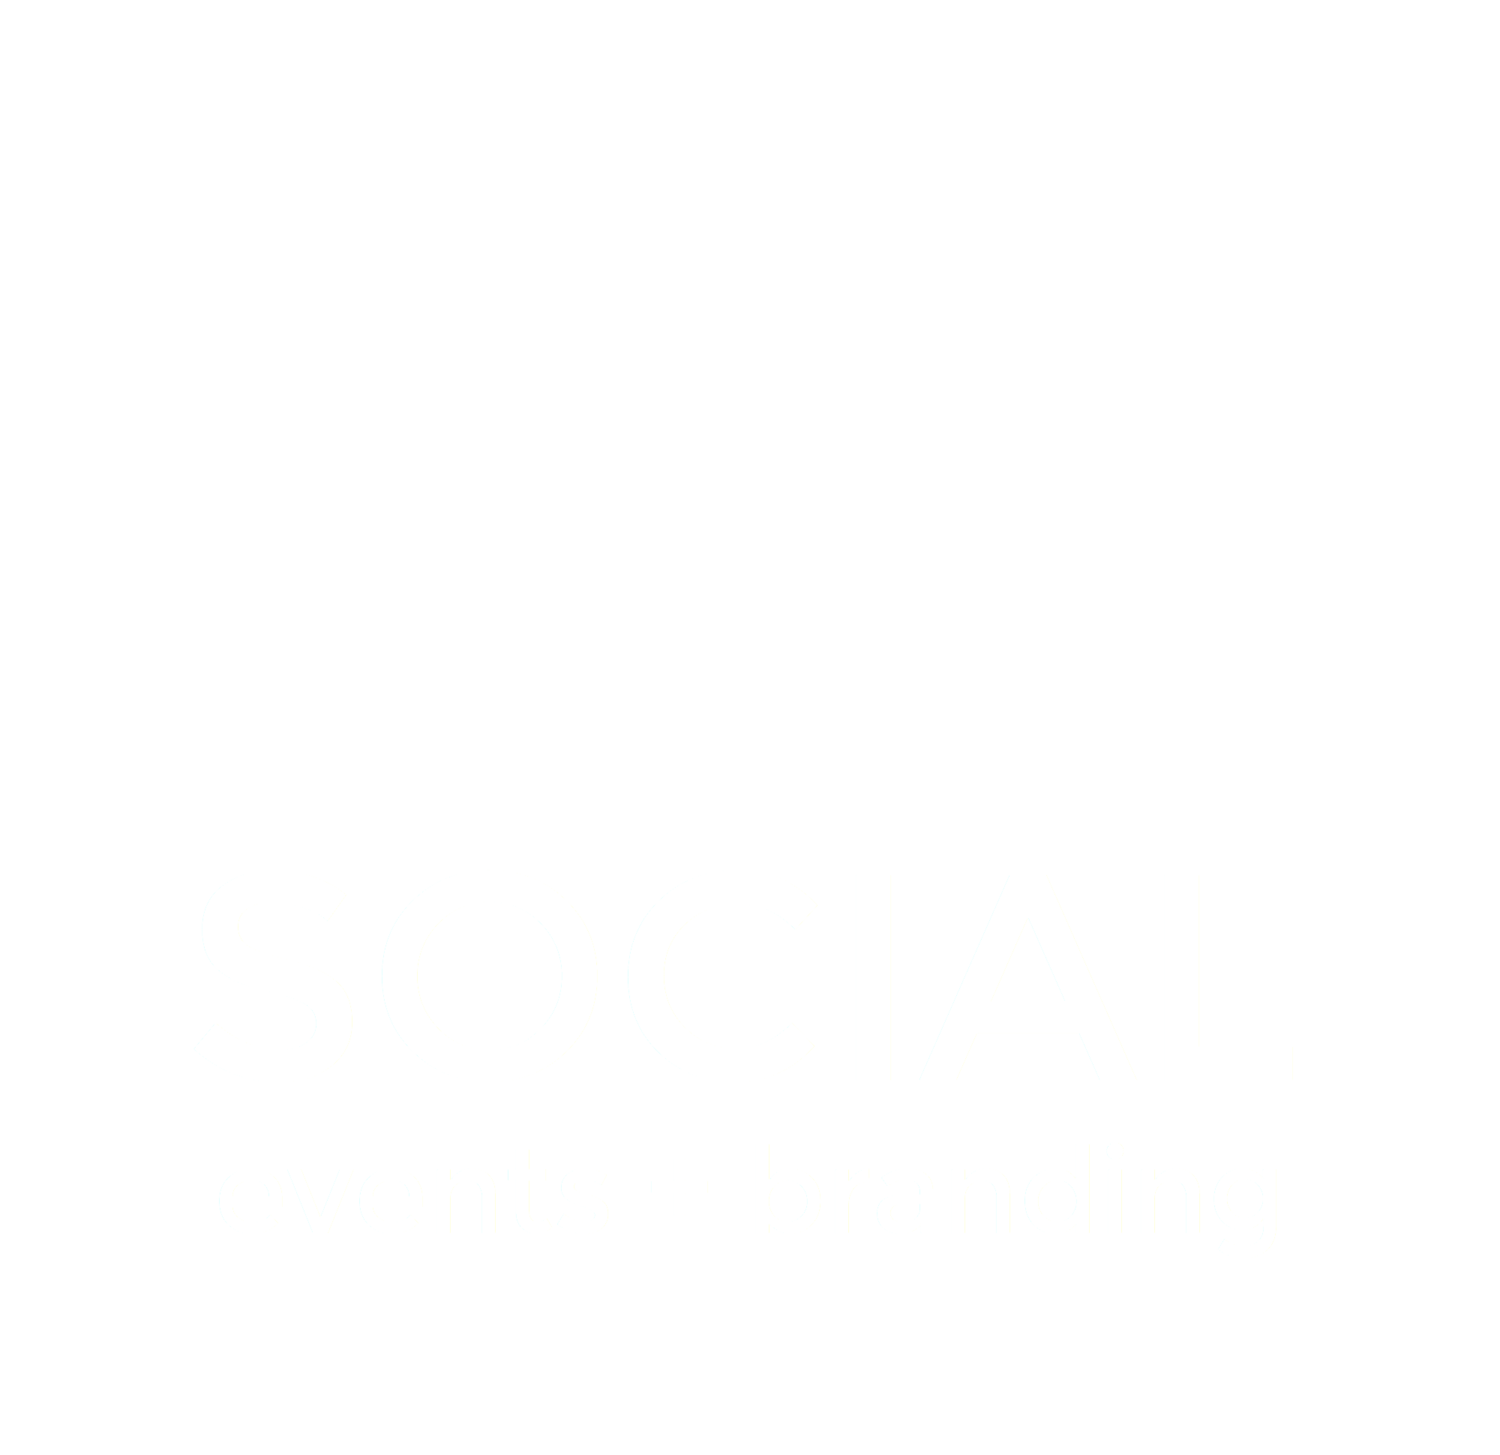 SOCIAL events + branding